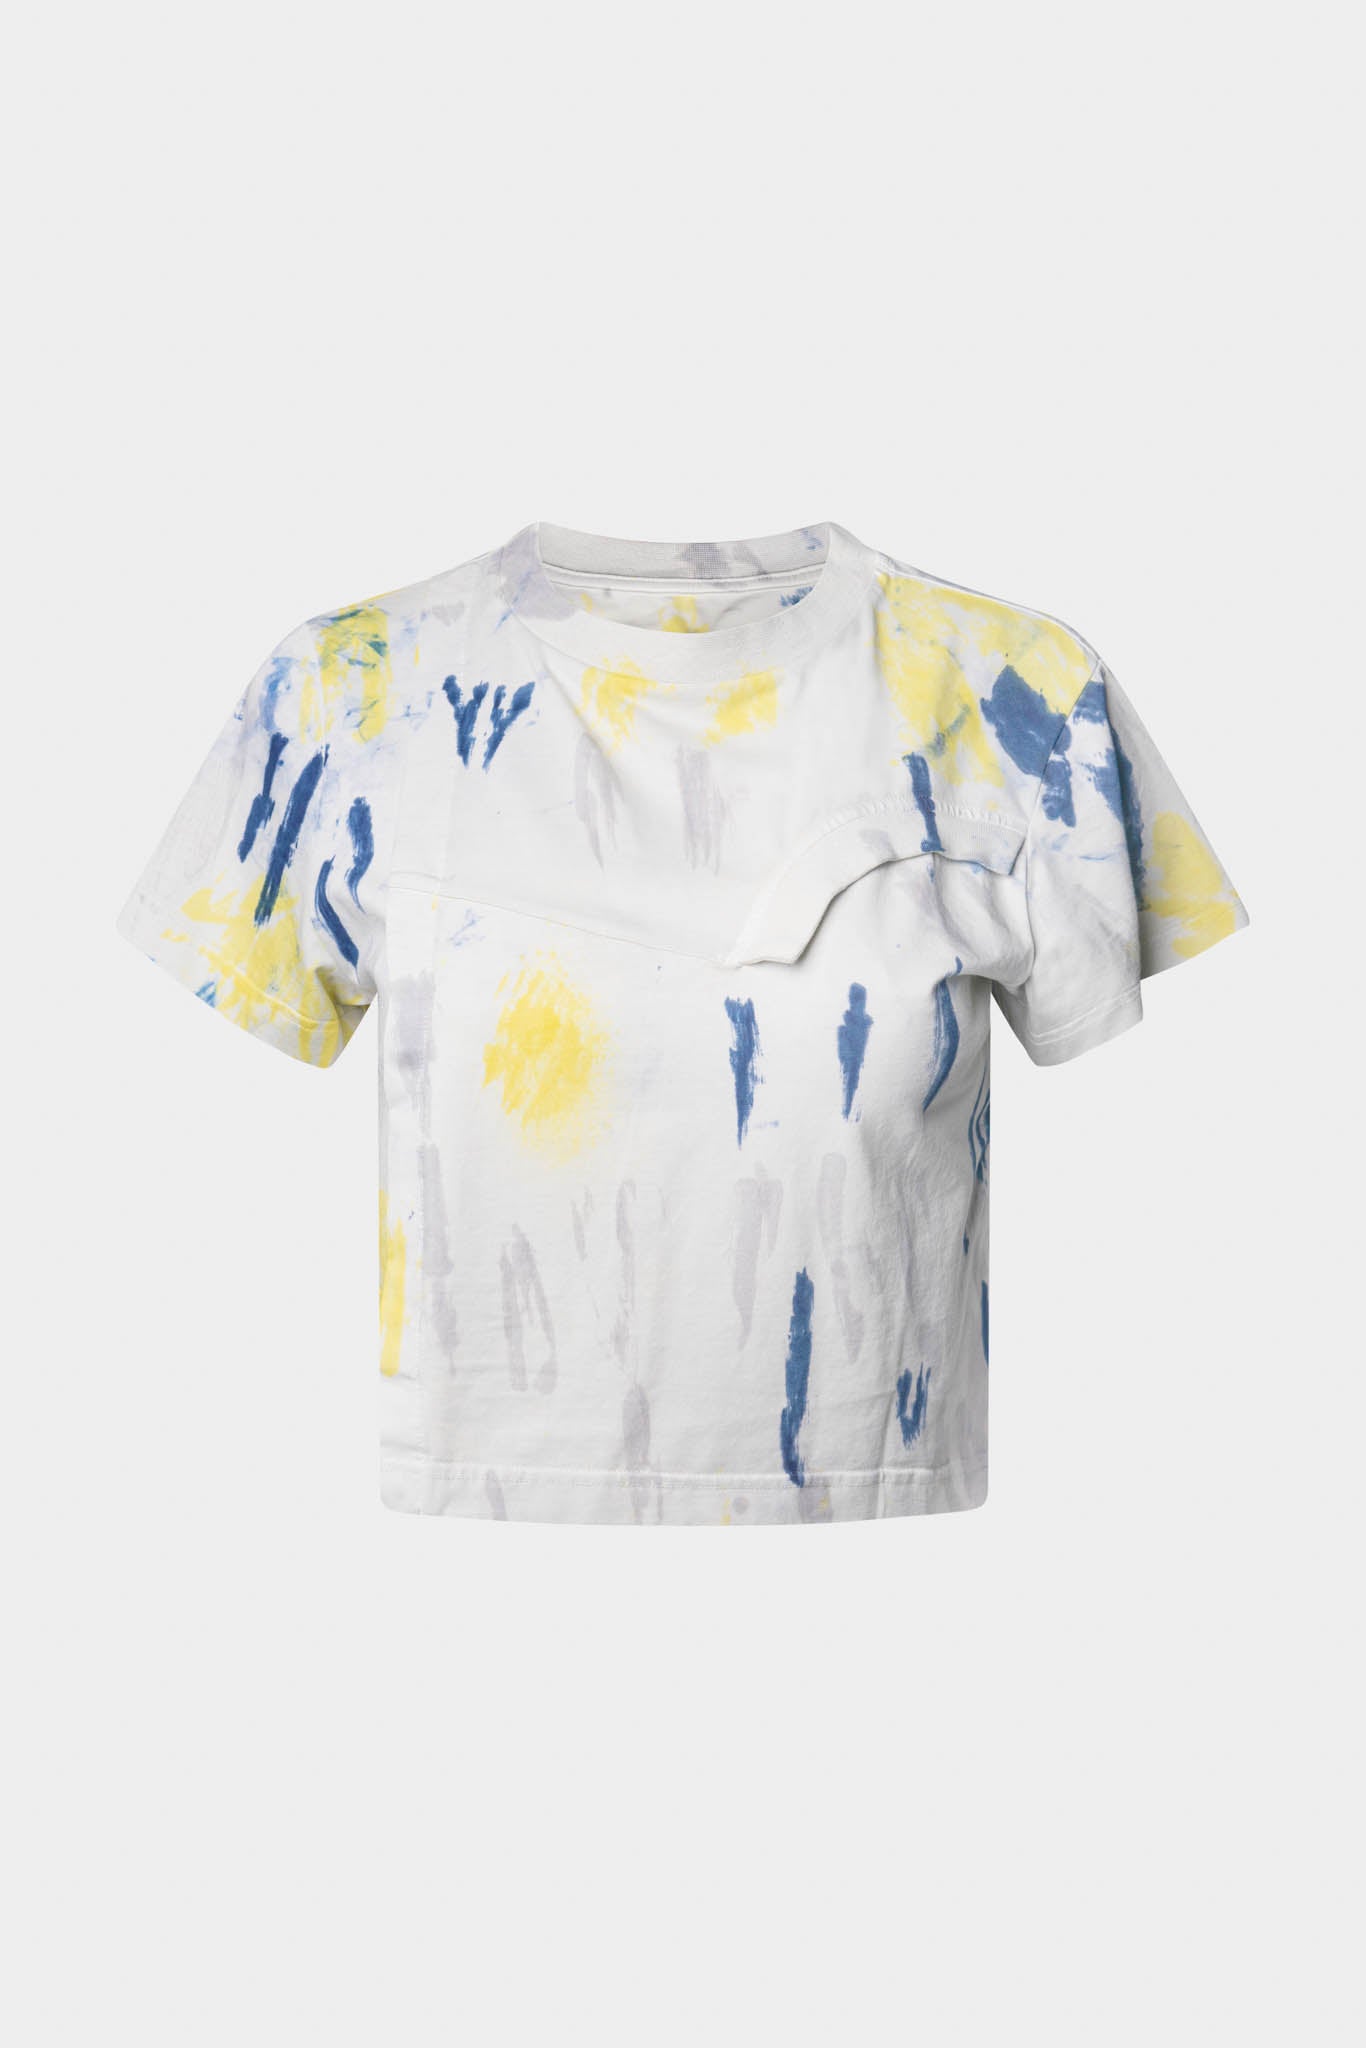 Selectshop FRAME - FENG CHEN WANG Multi-Colour Tie Dye T-Shirt Shirts Dubai